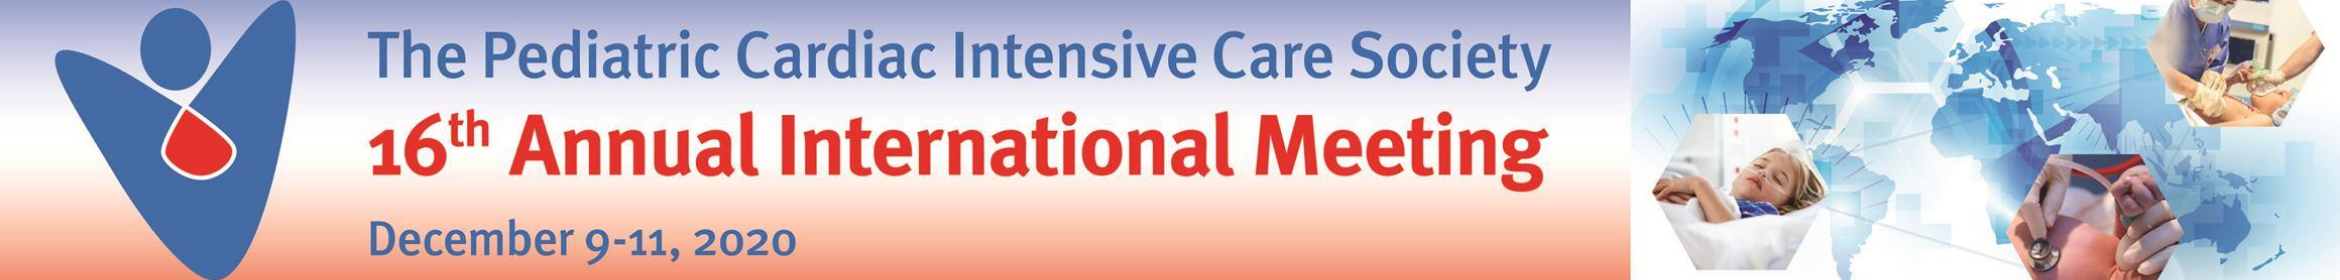 Pediatric Cardiac Intensive Care Society’s Annual Meeting Main banner